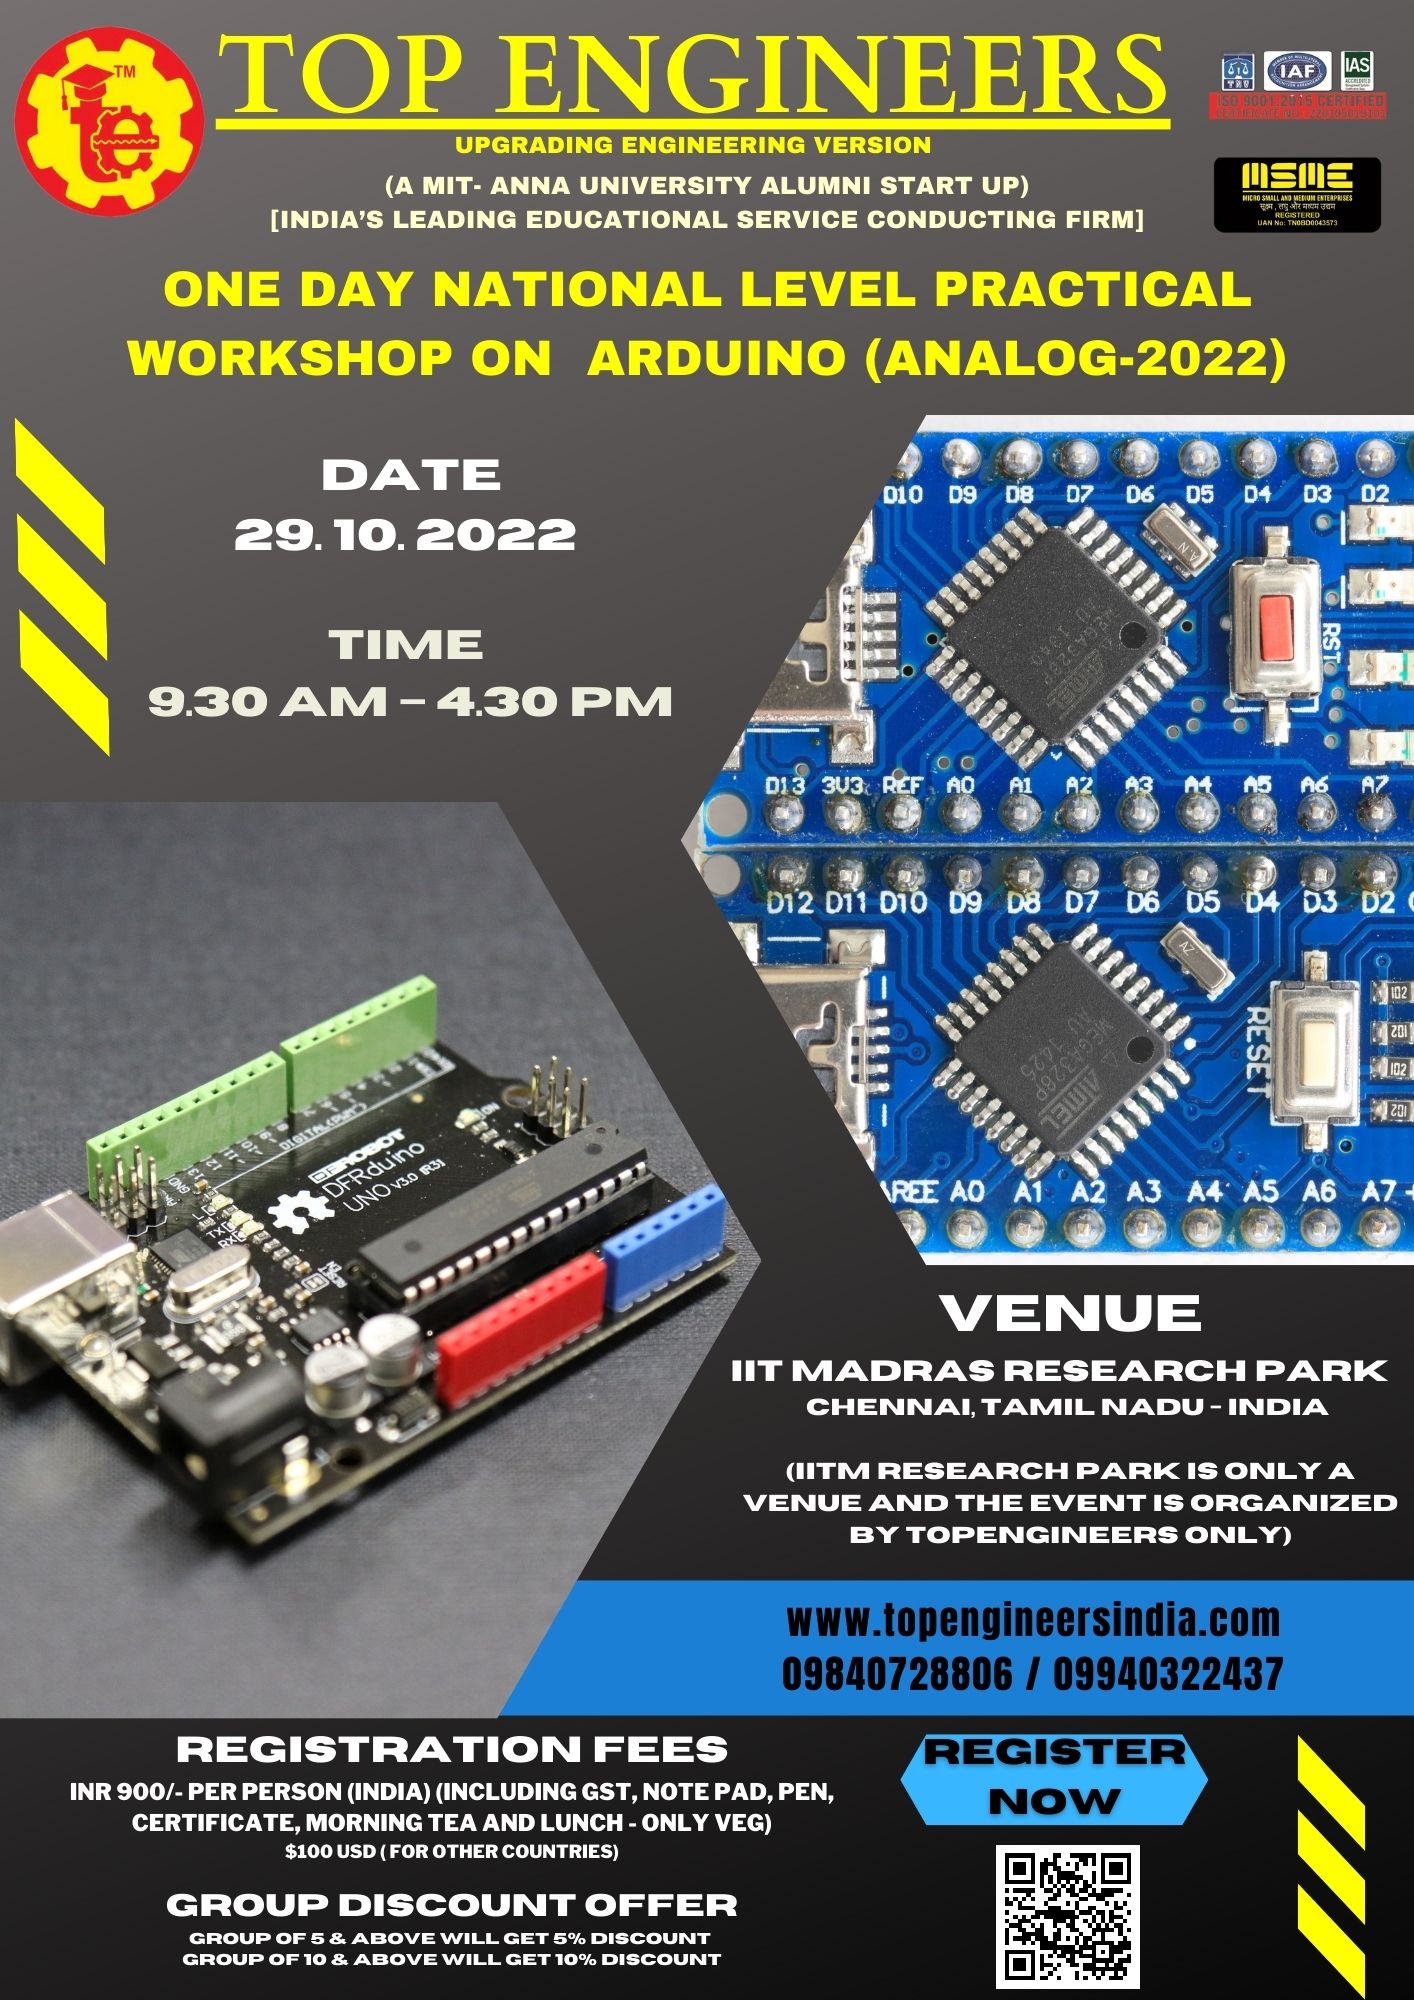 One Day National Level Practical Workshop on Arduino (Analog-2022)